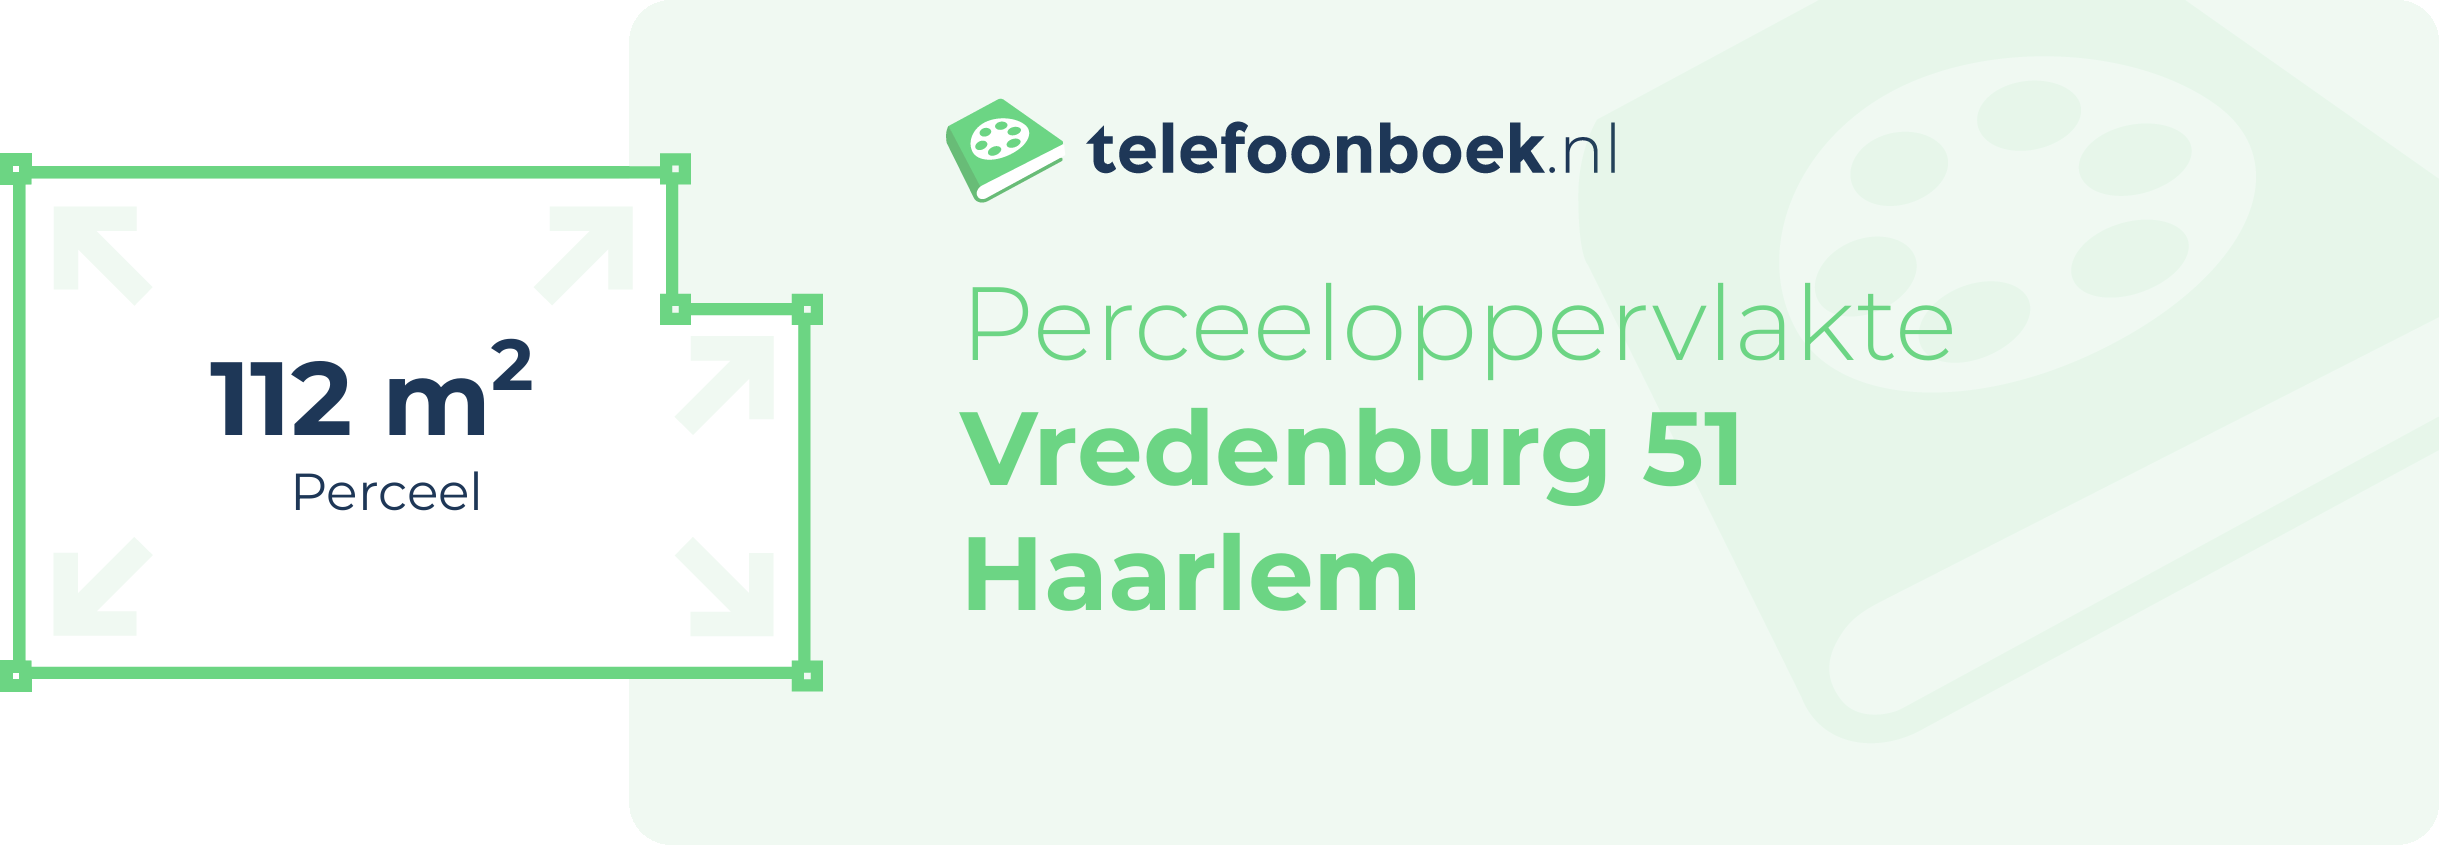 Perceeloppervlakte Vredenburg 51 Haarlem